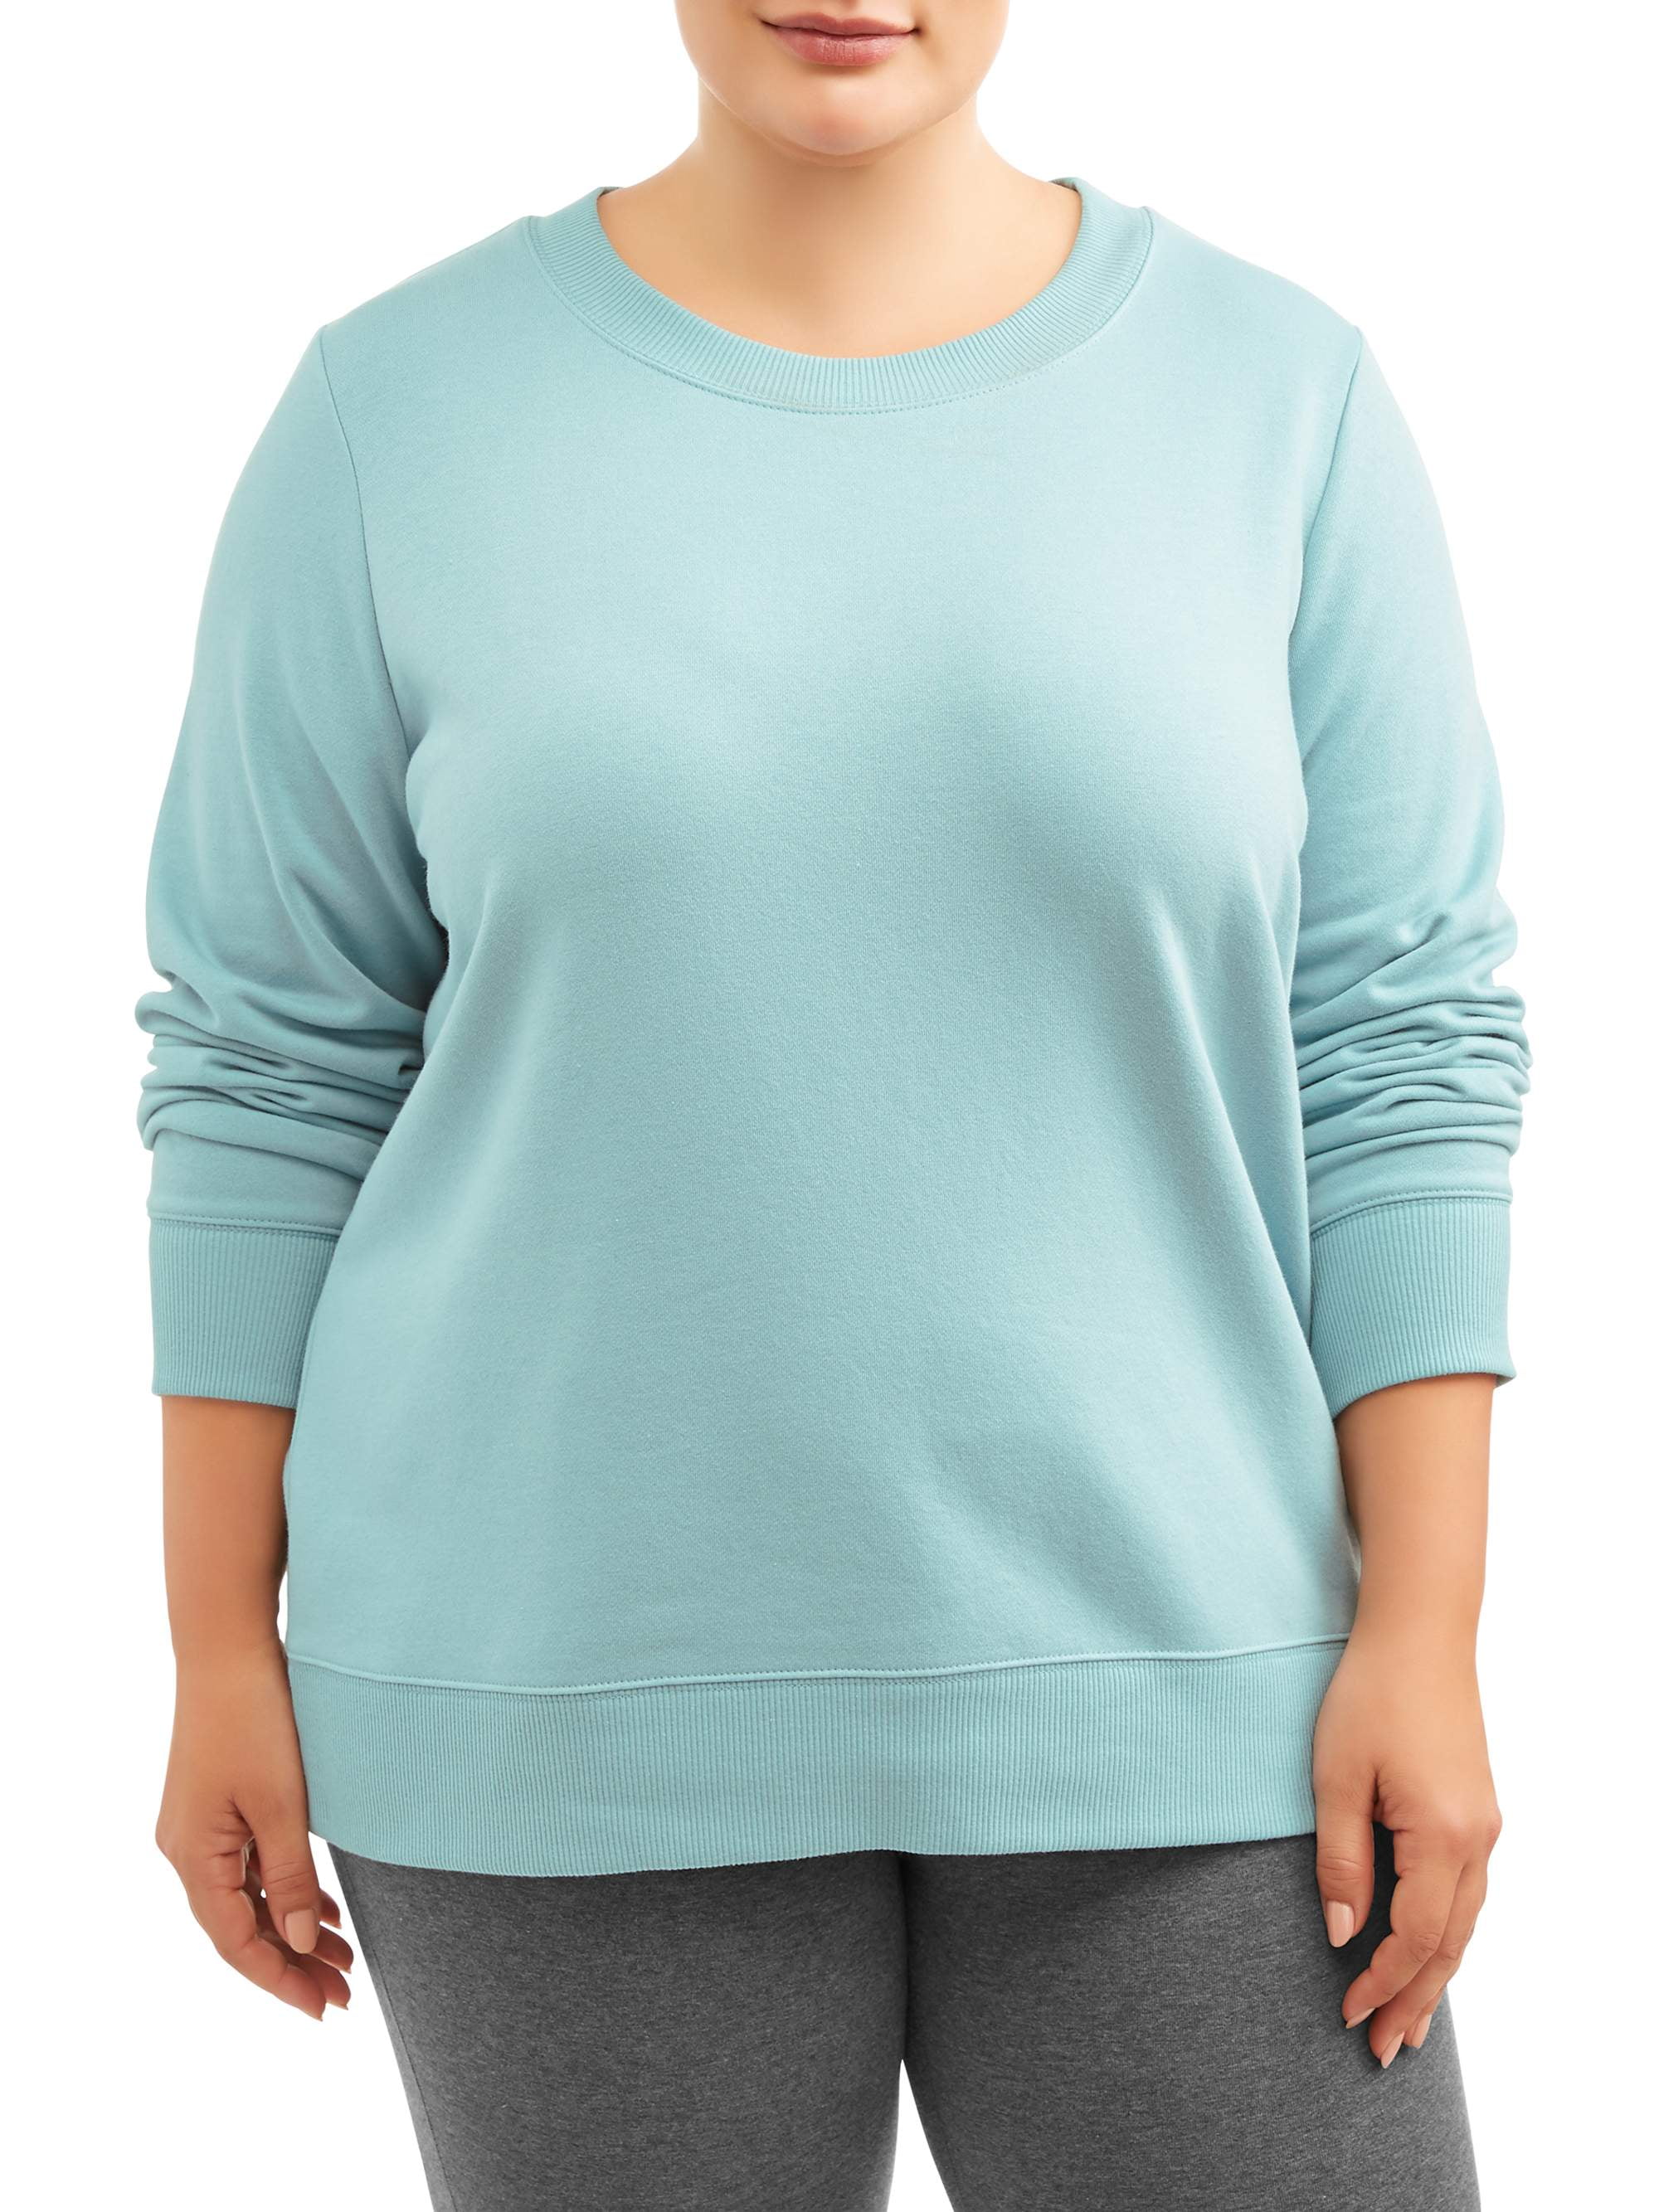 Terra & Sky Graphic Sweatshirt Plus Size 4X 28/30 Womens Lightweight Jersey NWT 